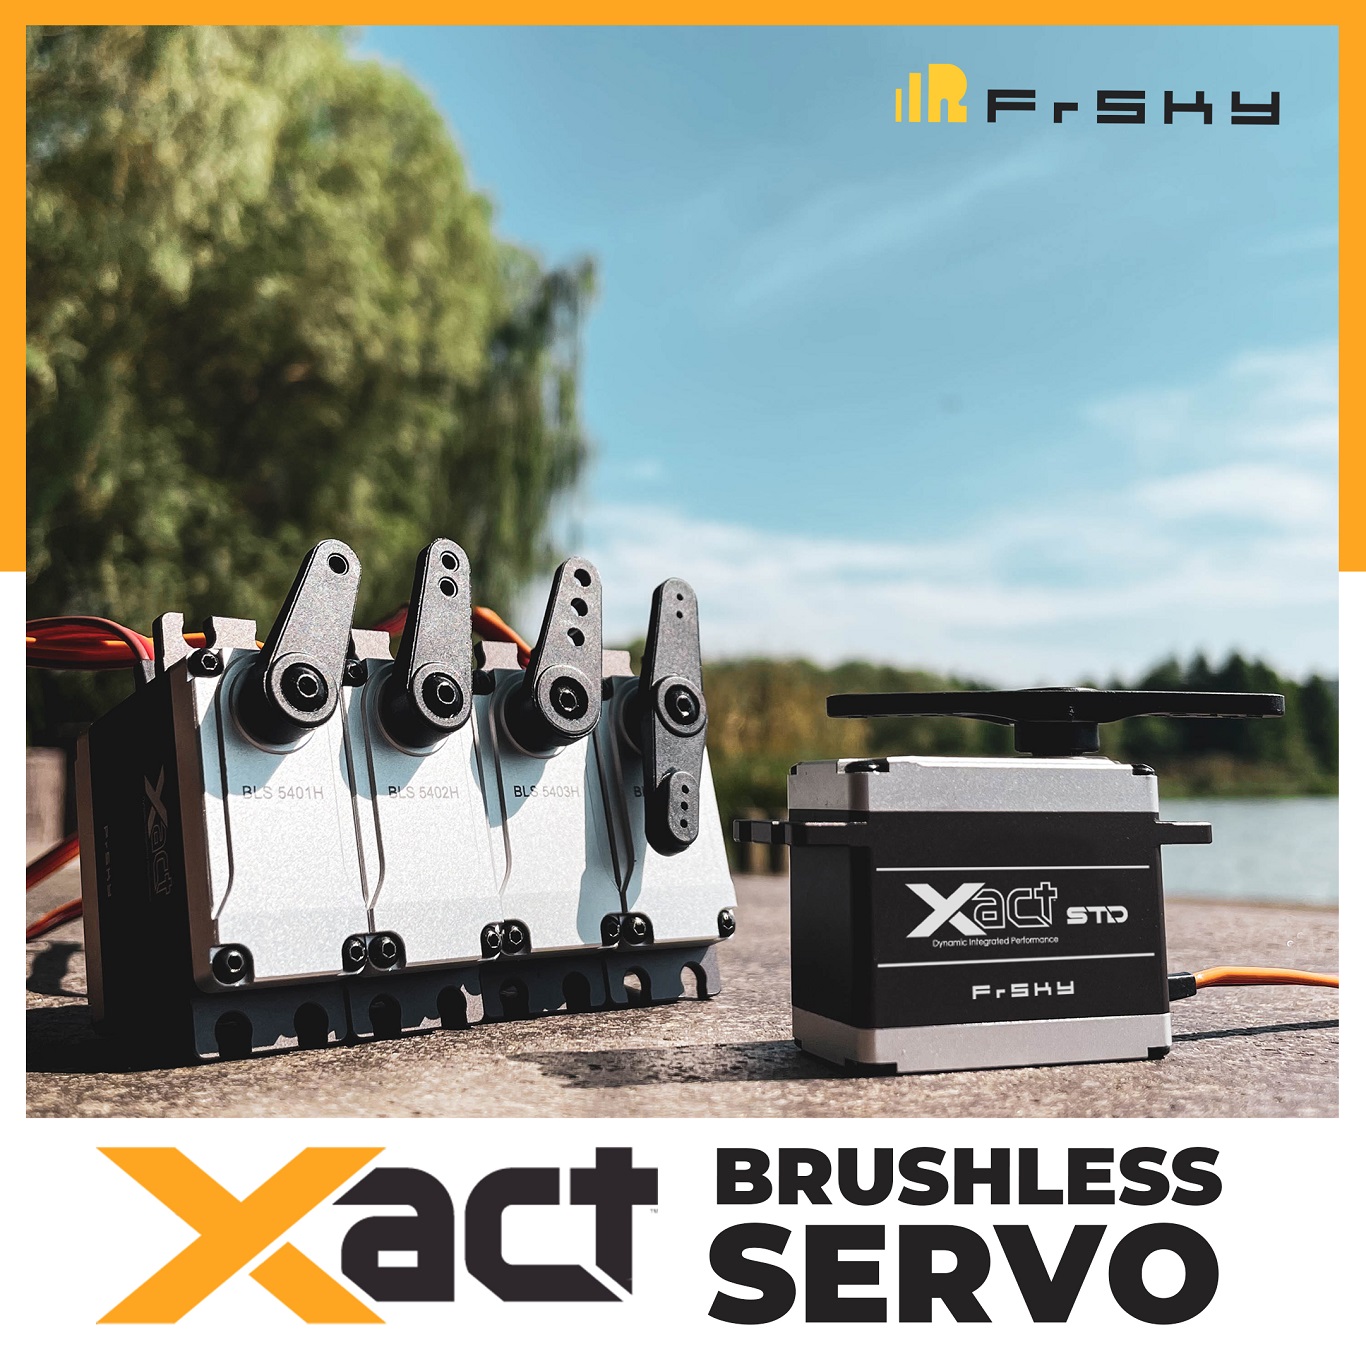 FrSky Xact BLS5400H Series Brushless High-Voltage Servos Release! - FrSky -  Lets you set the limits